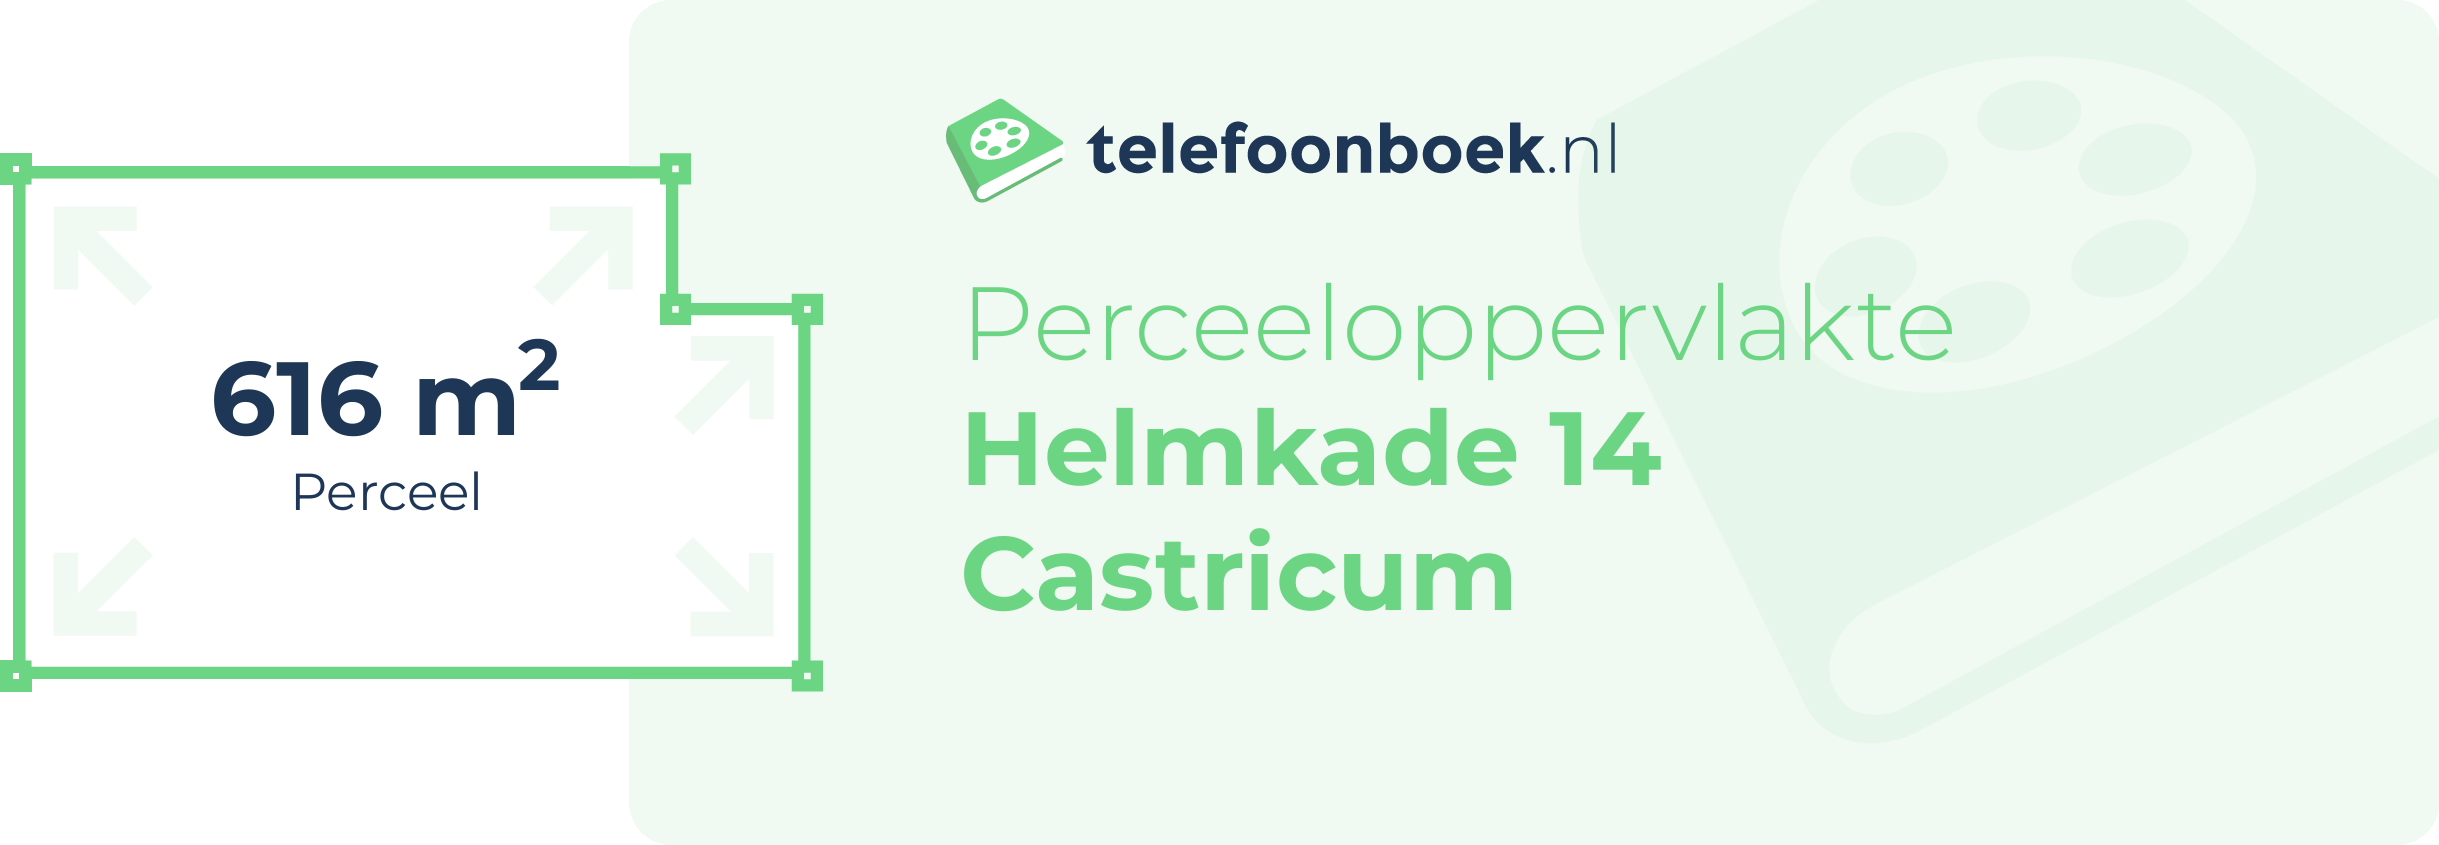 Perceeloppervlakte Helmkade 14 Castricum